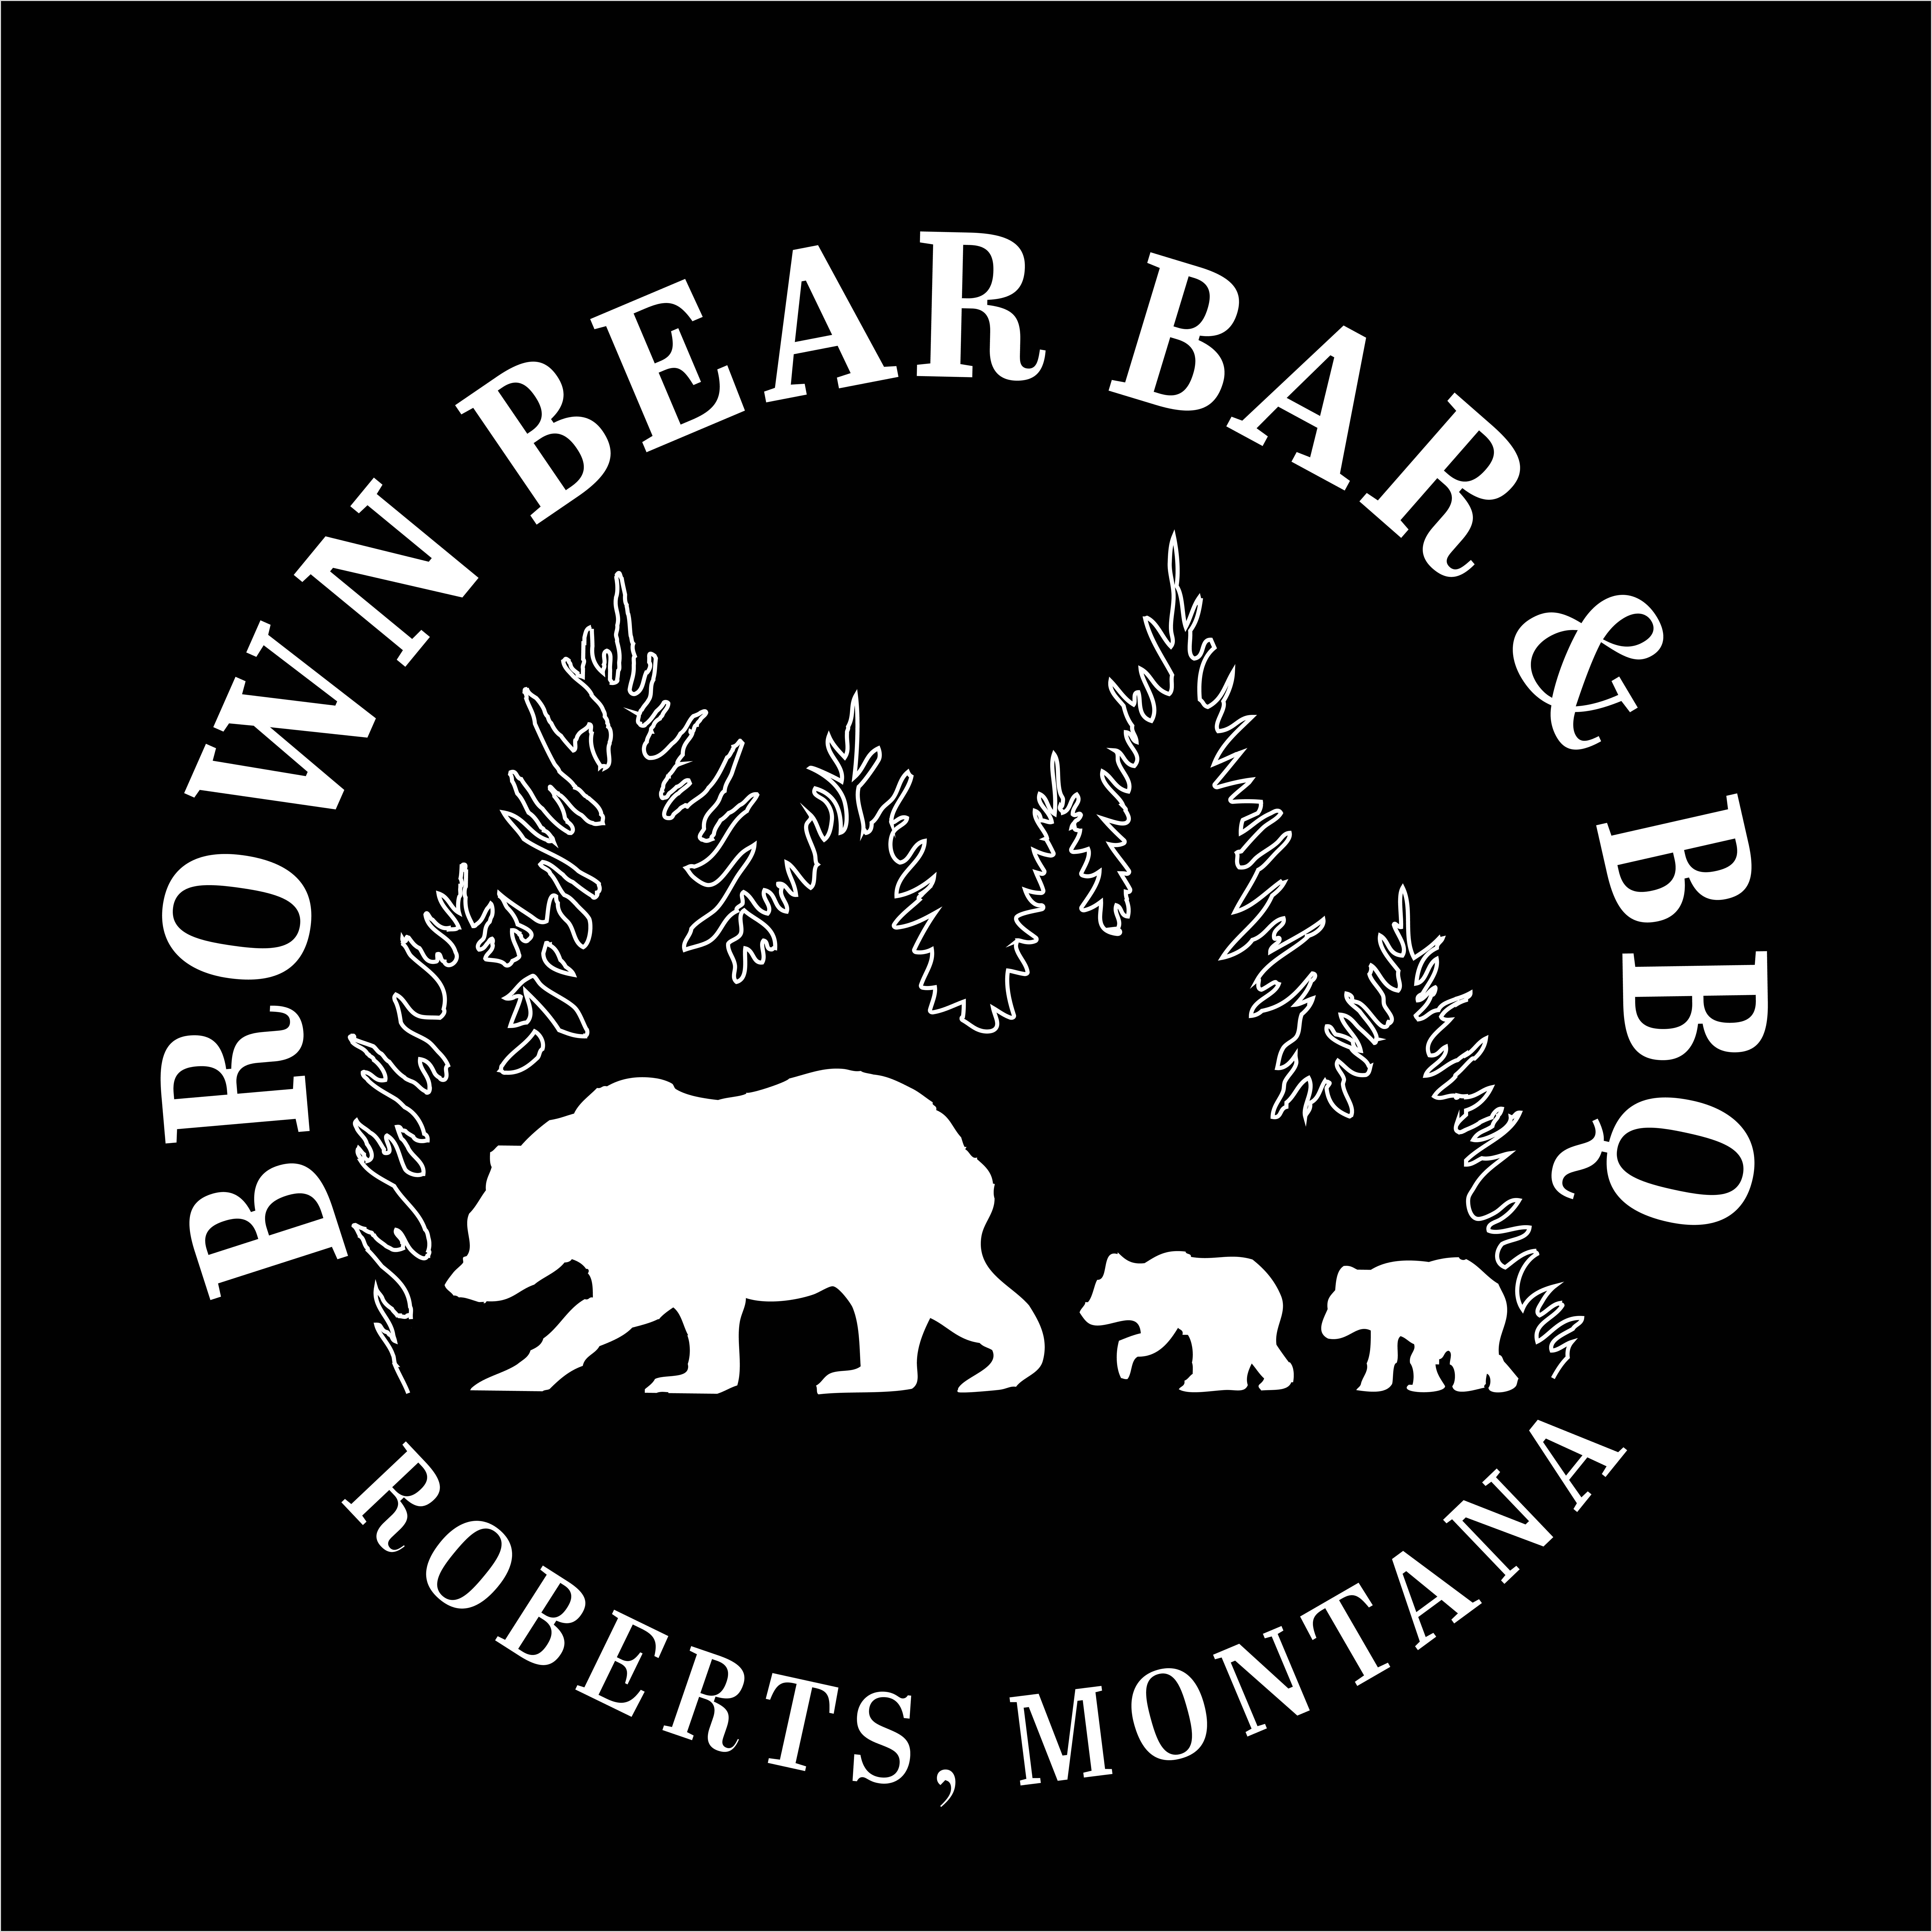 Roberts Bar & BBQ (at the Brown Bear Inn)